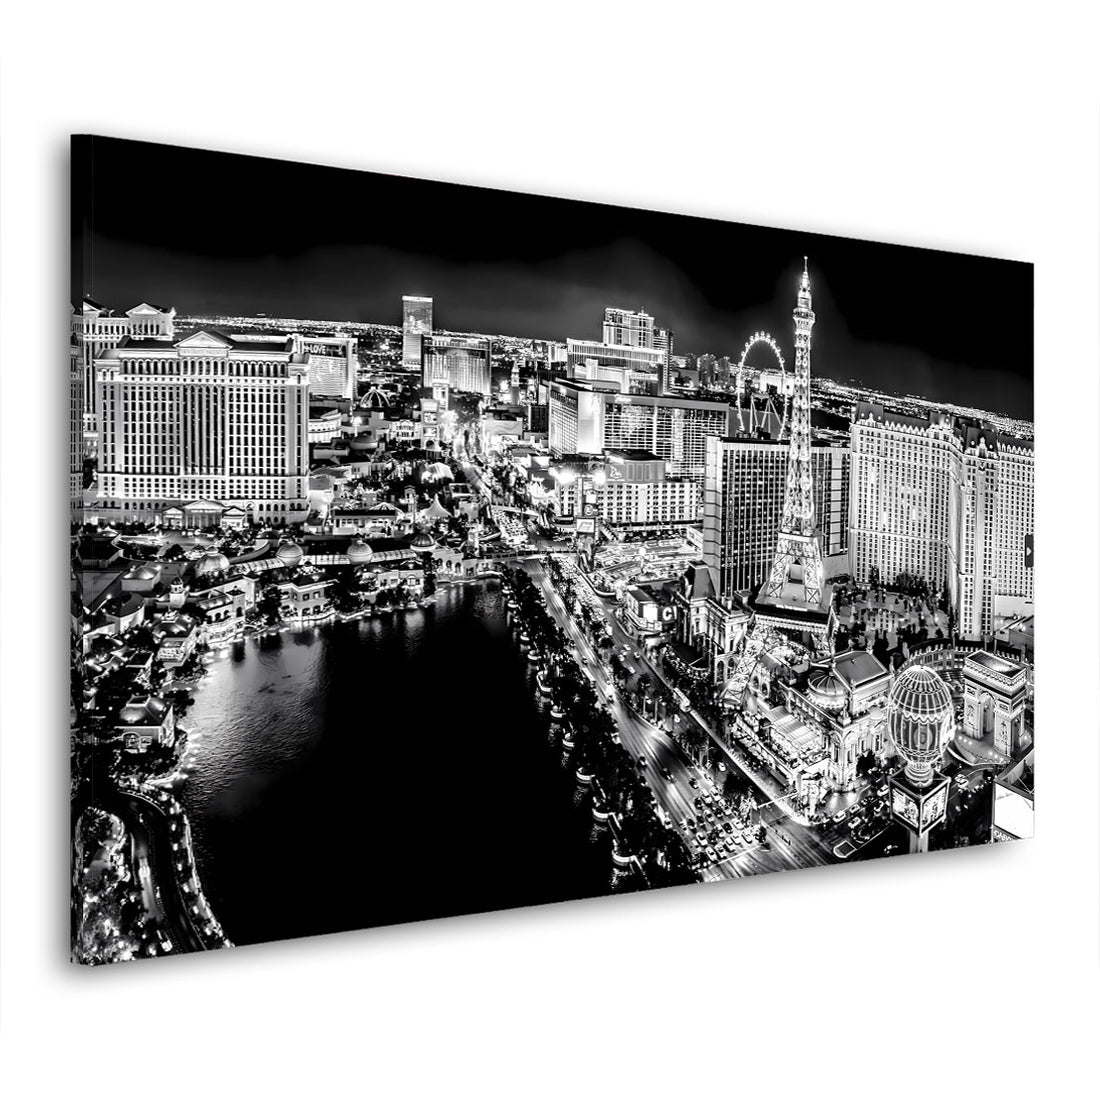 Wandbild Las Vegas Nevada, USA, schwarz weiß